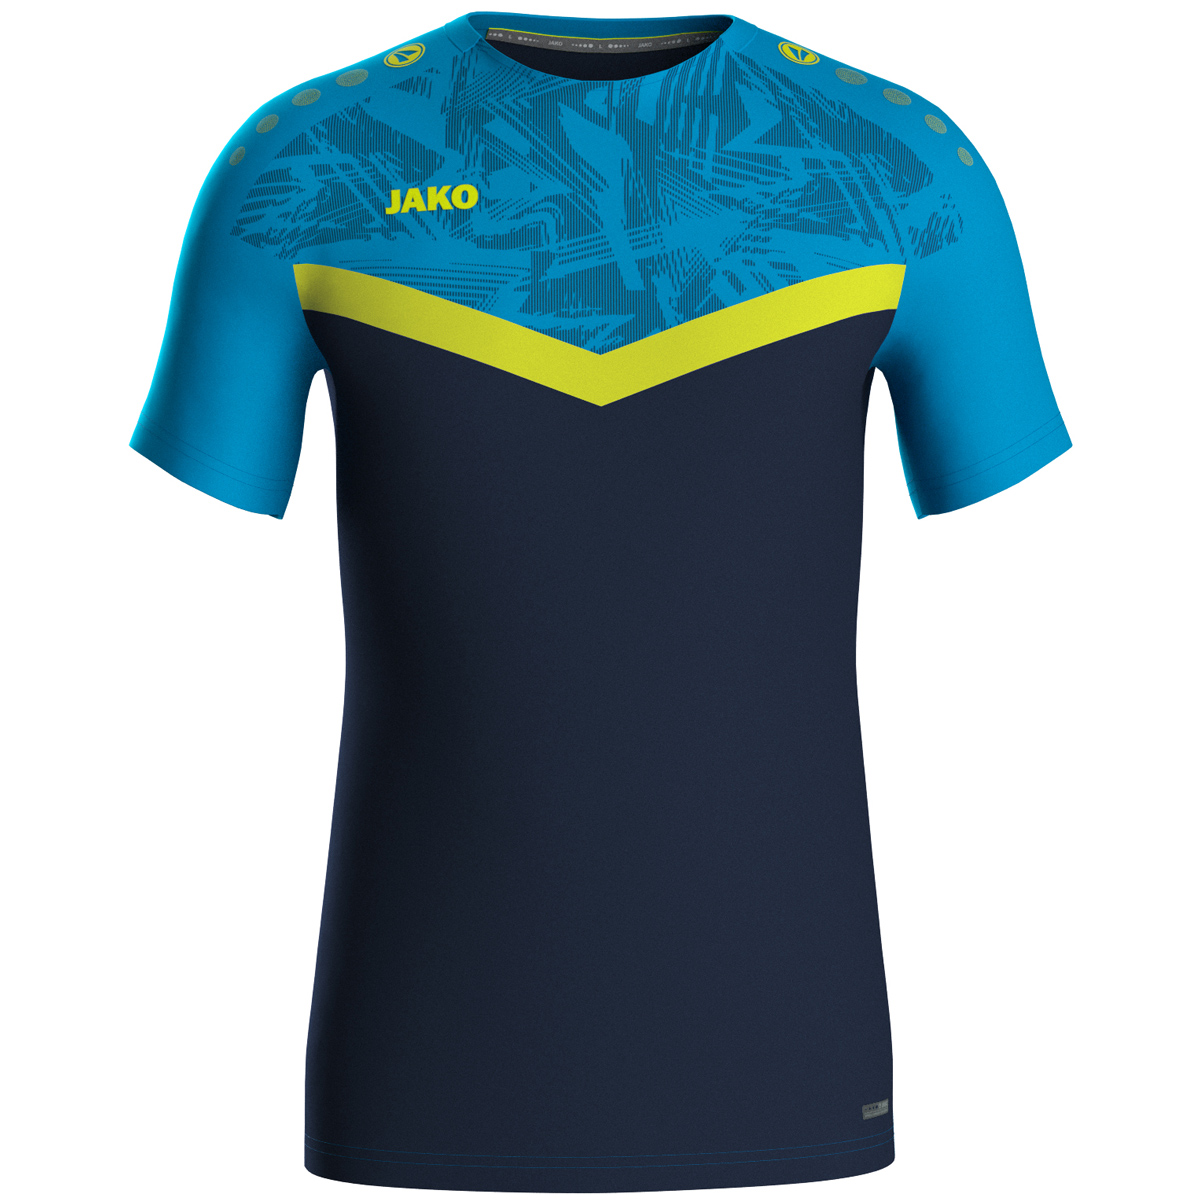 JAKO T-Shirt Iconic, L, marine/JAKO blau/neongelb